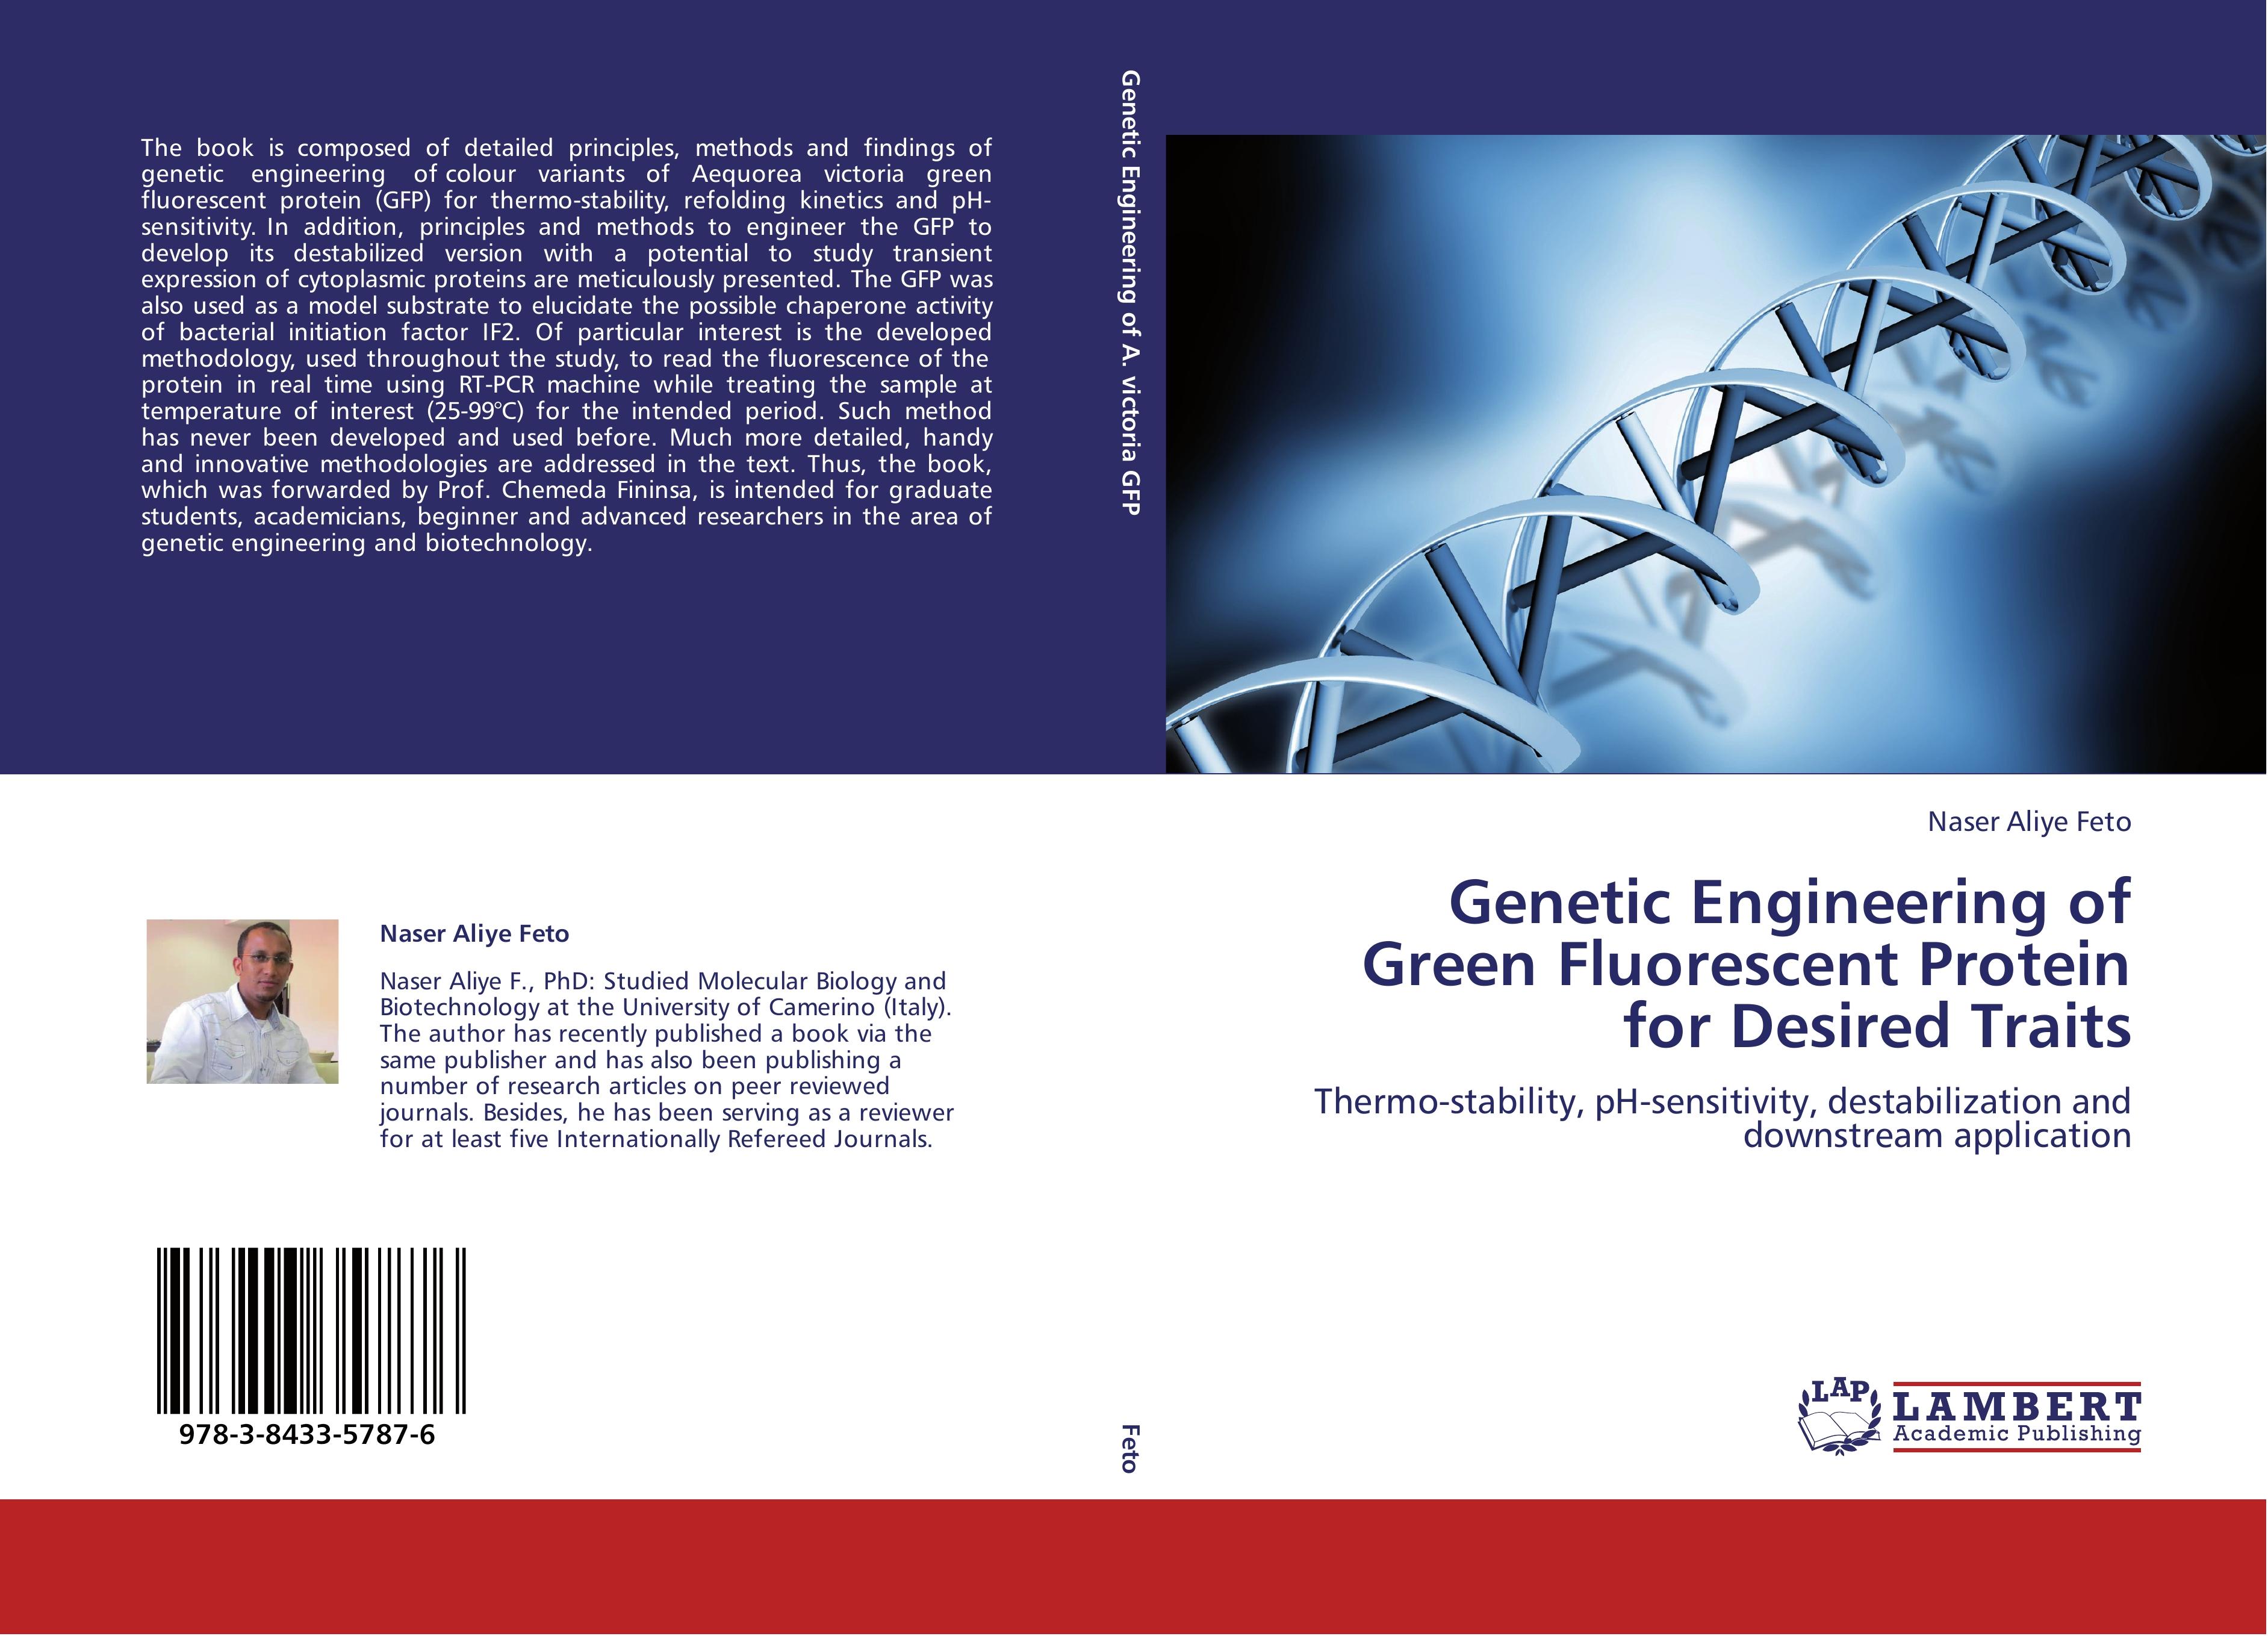 Genetic Engineering of Green Fluorescent Protein for Desired Traits - Naser Aliye Feto